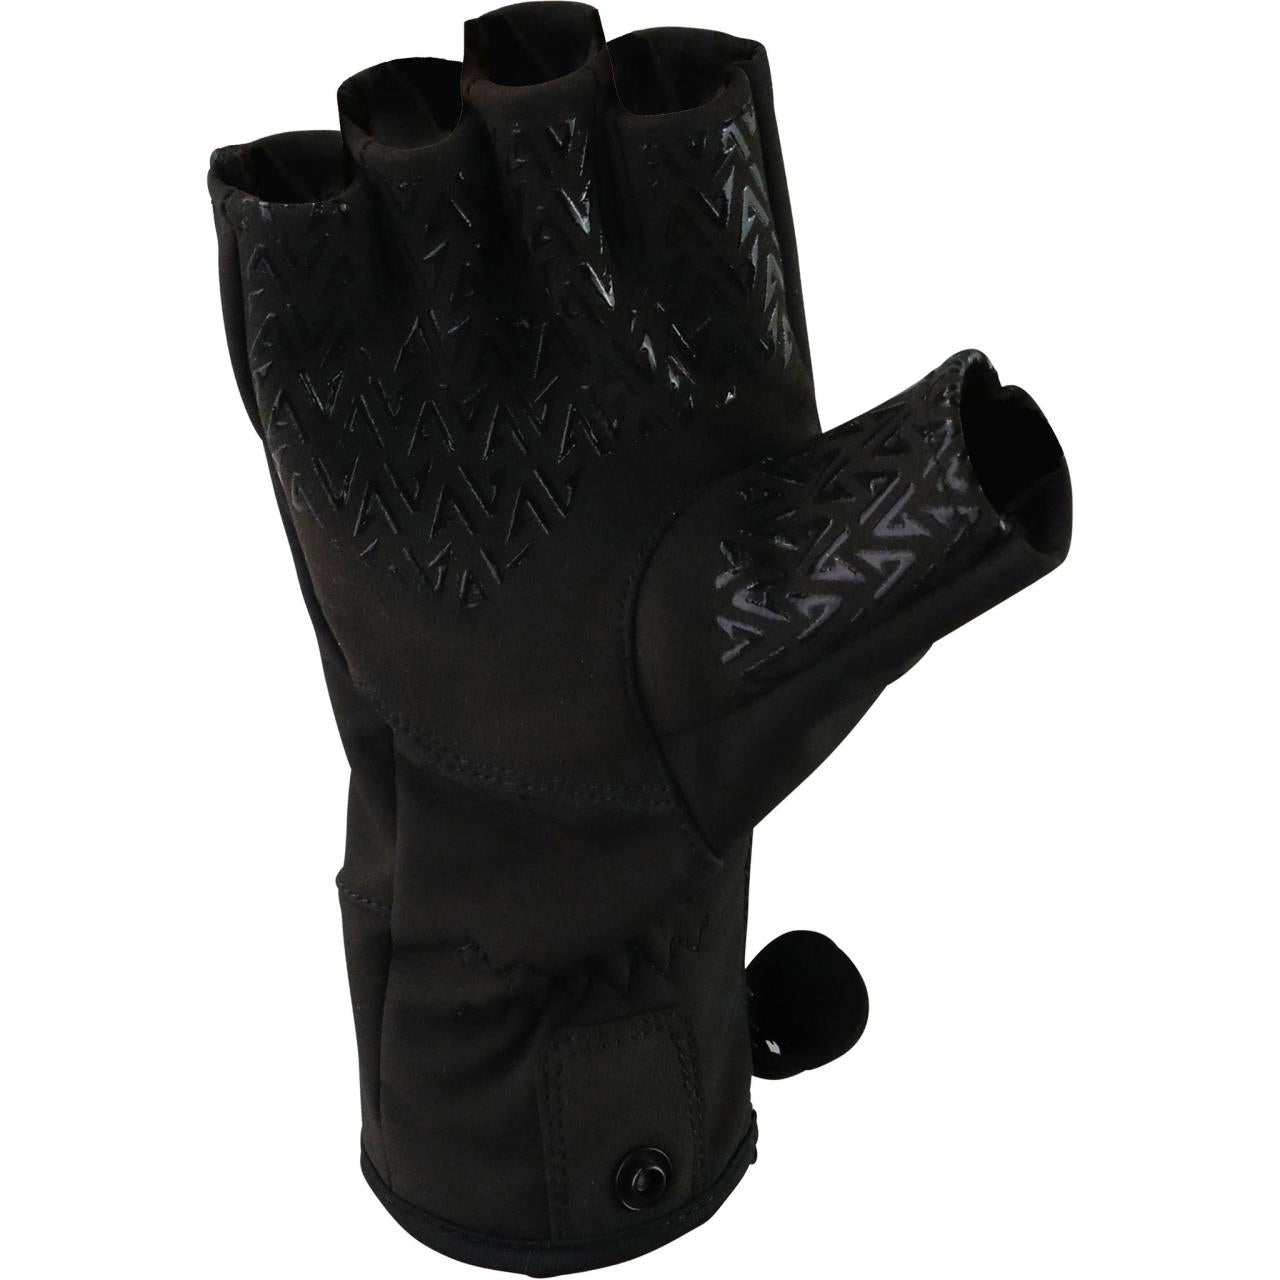 AFTCO Windblok Half Finger Fishing Gloves XL